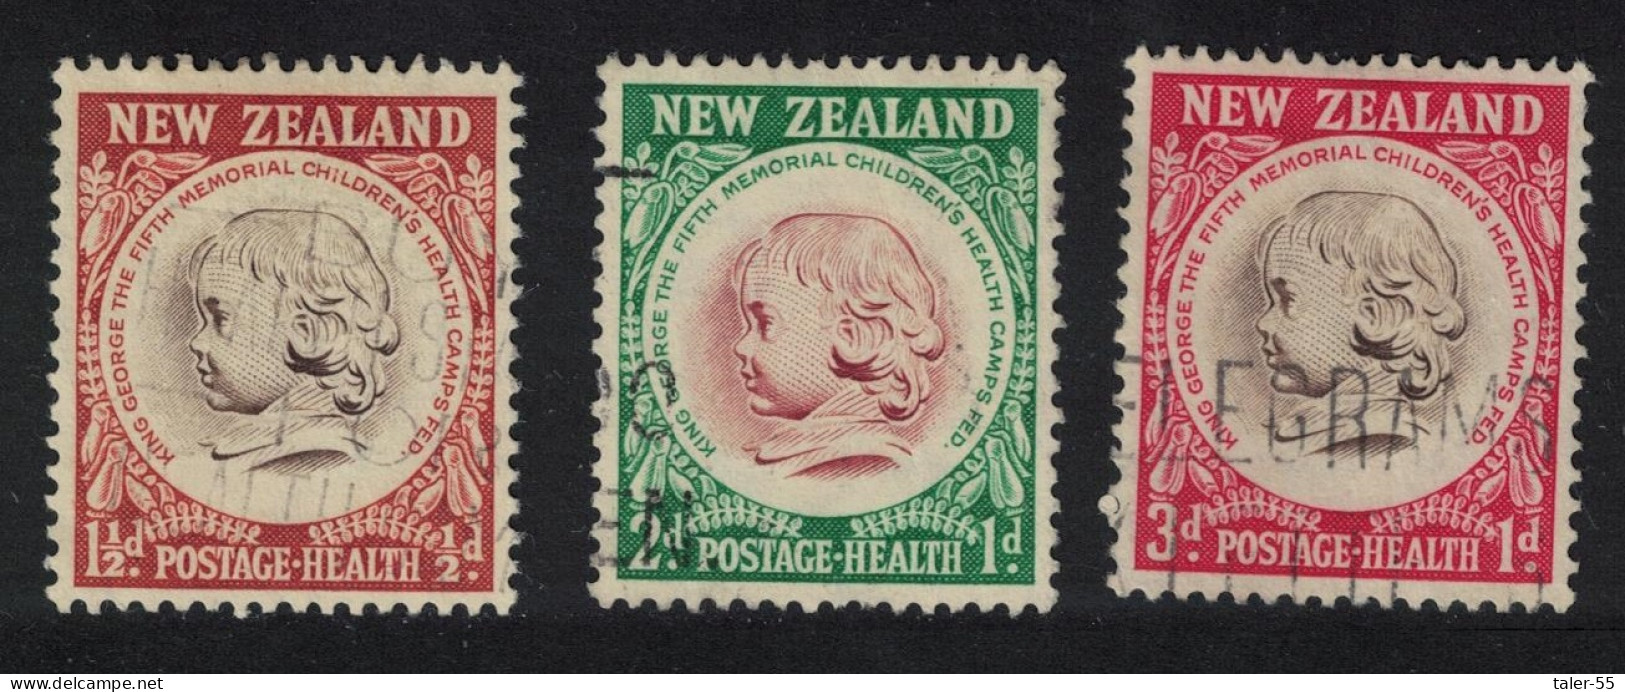 New Zealand Health Camps Federation Emblem 3v 1955 Canc SG#742-744 - Oblitérés